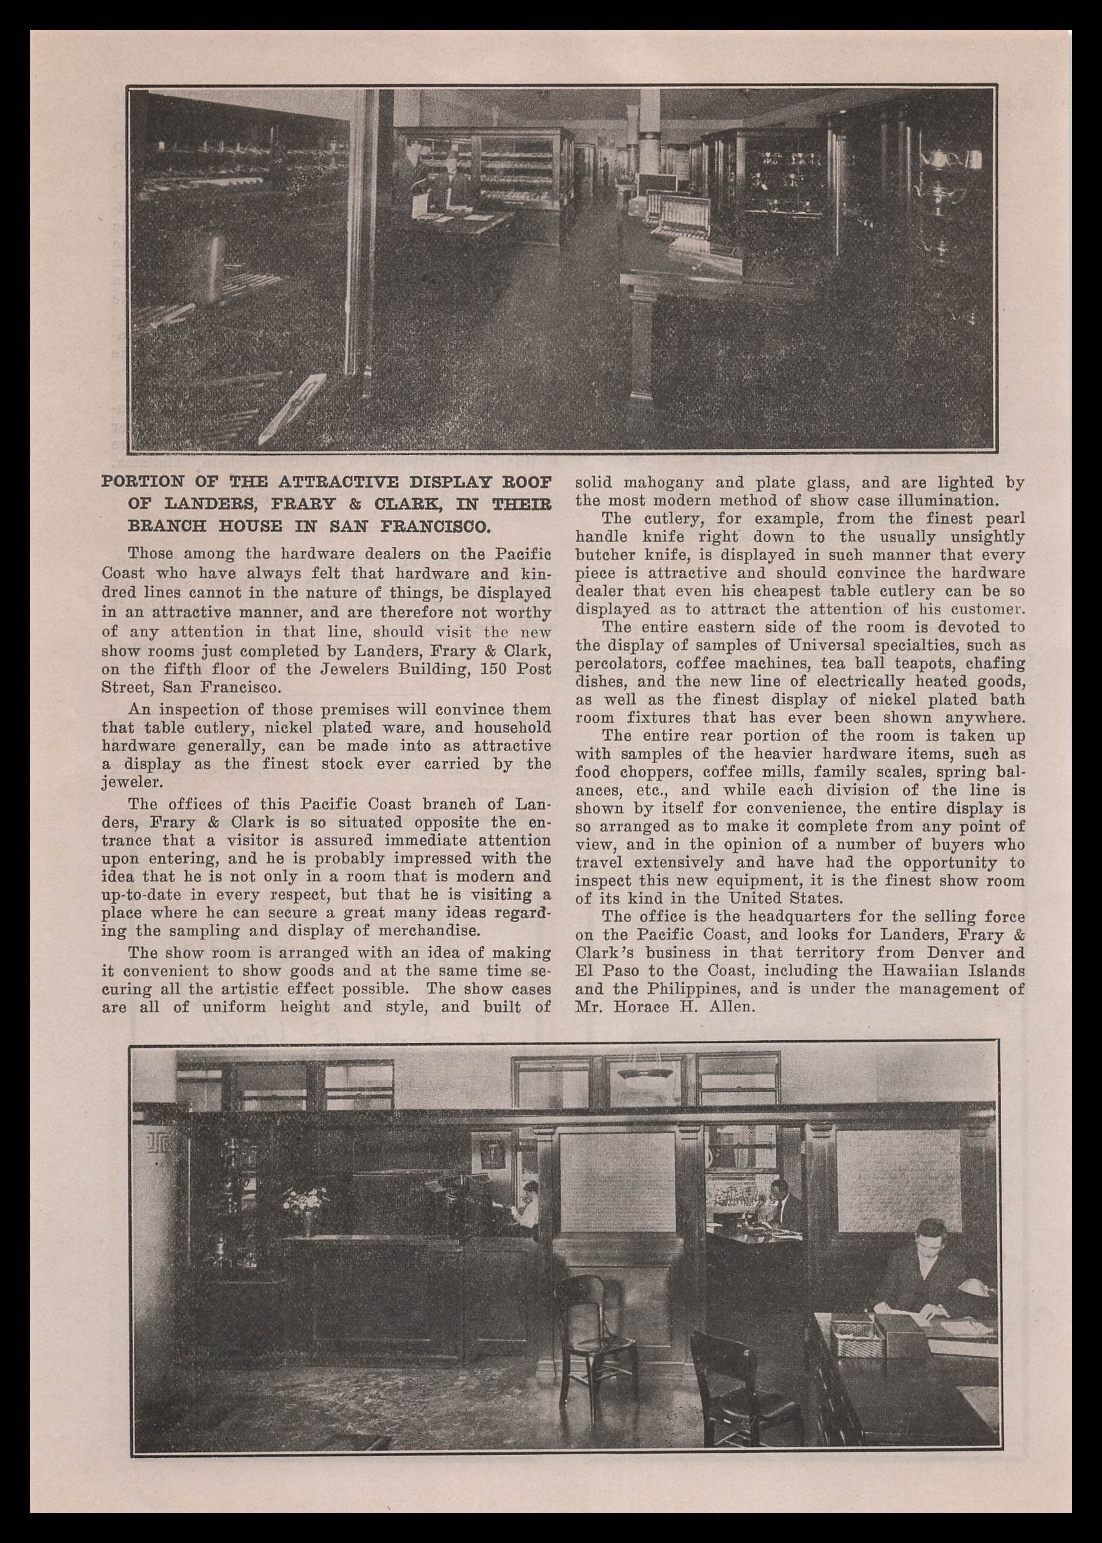 1912 Landers Frary Clark Hardware Store Photos San Francisco CA Article Print Ad